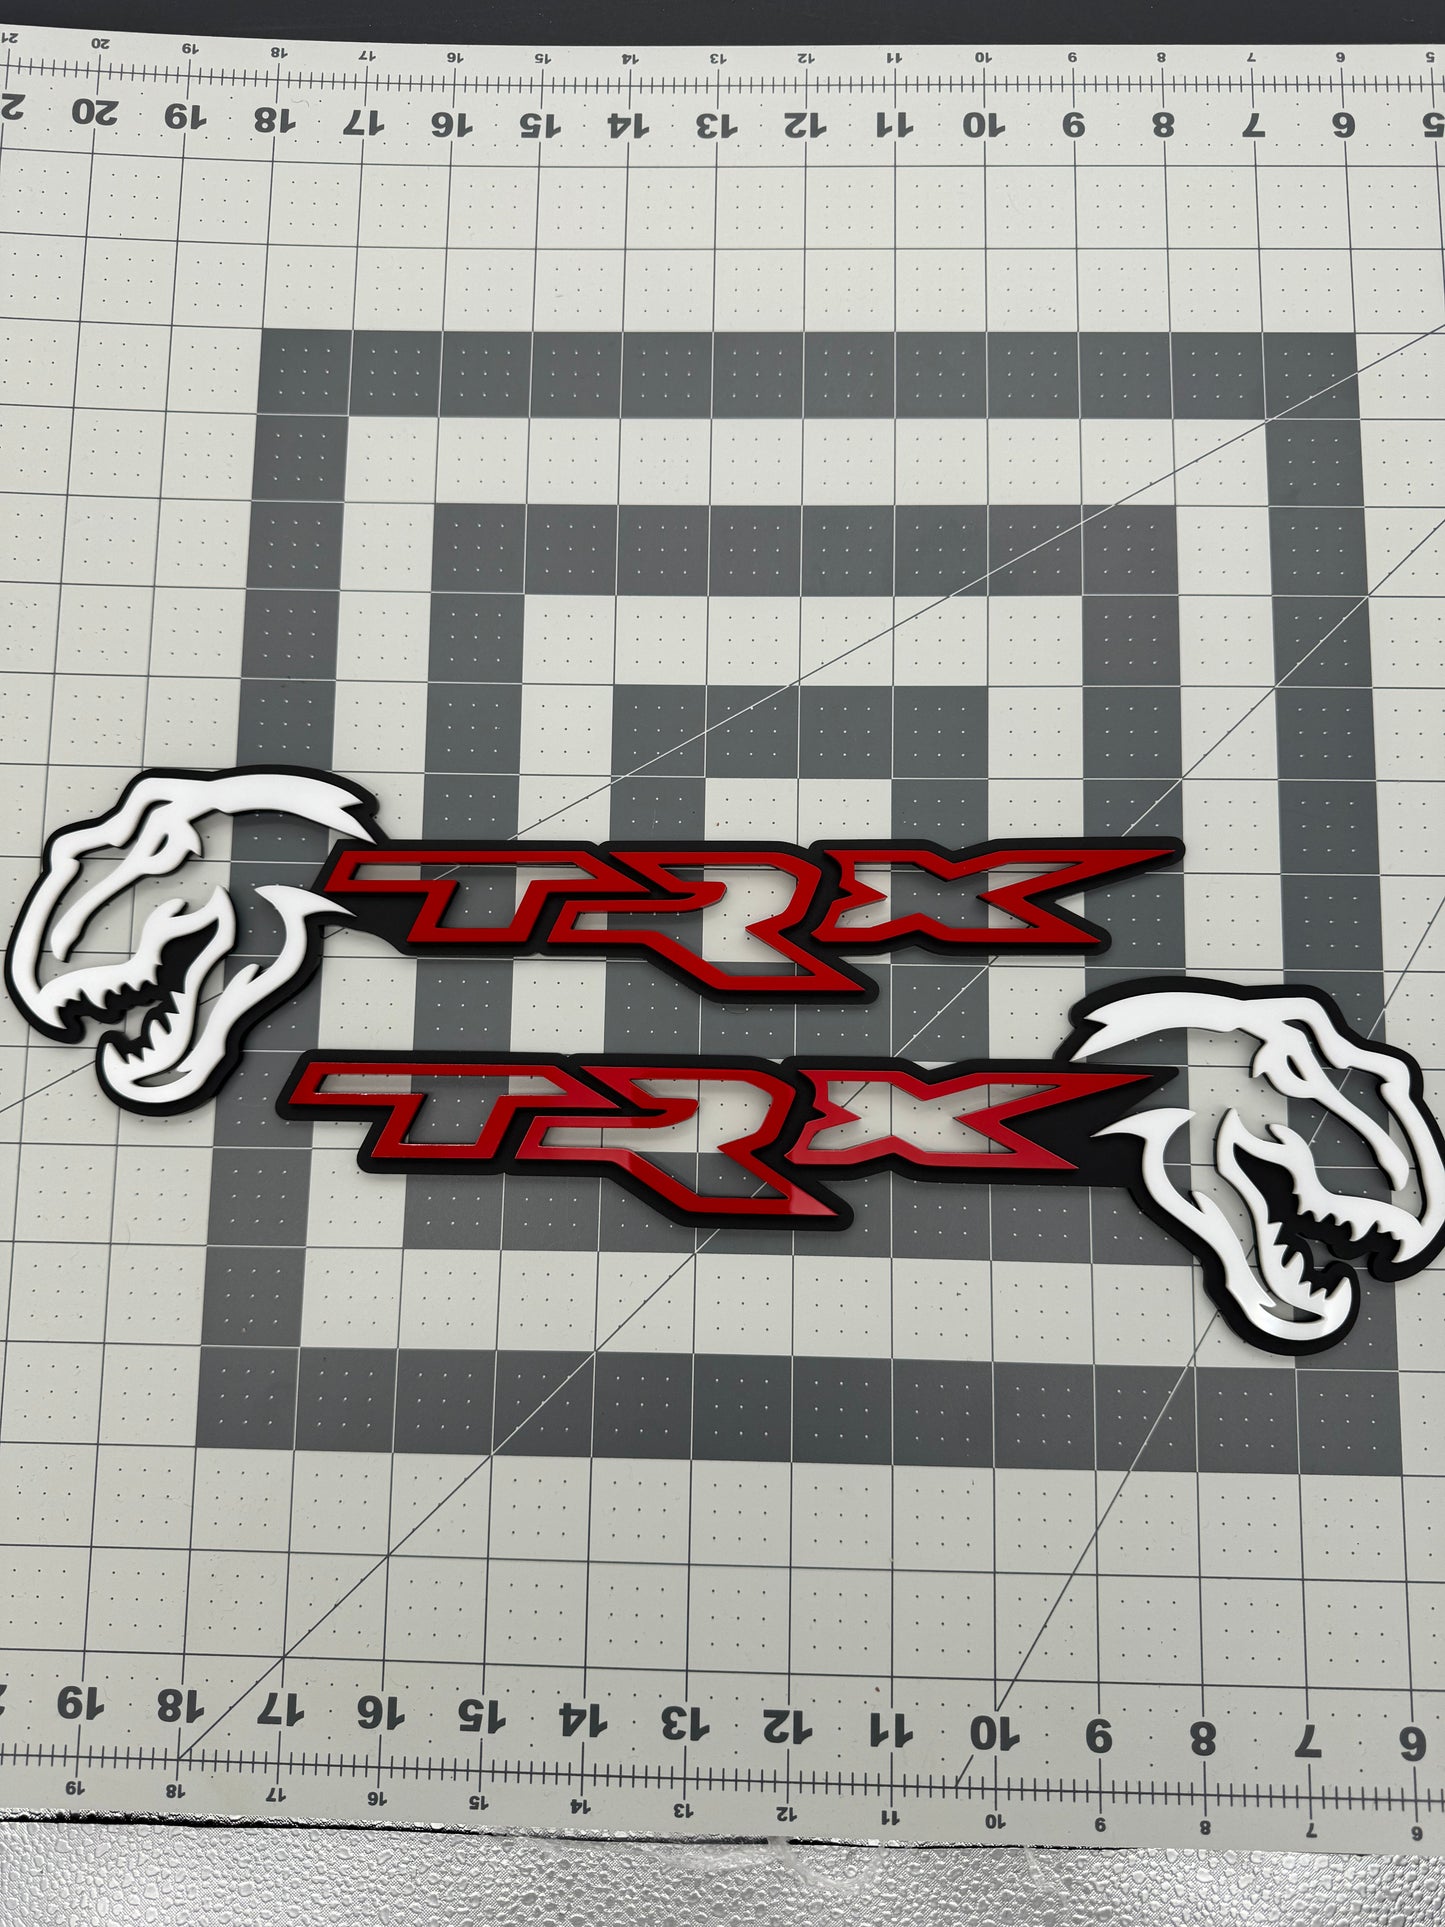 Trex/TRX Design #2 combo badge pair